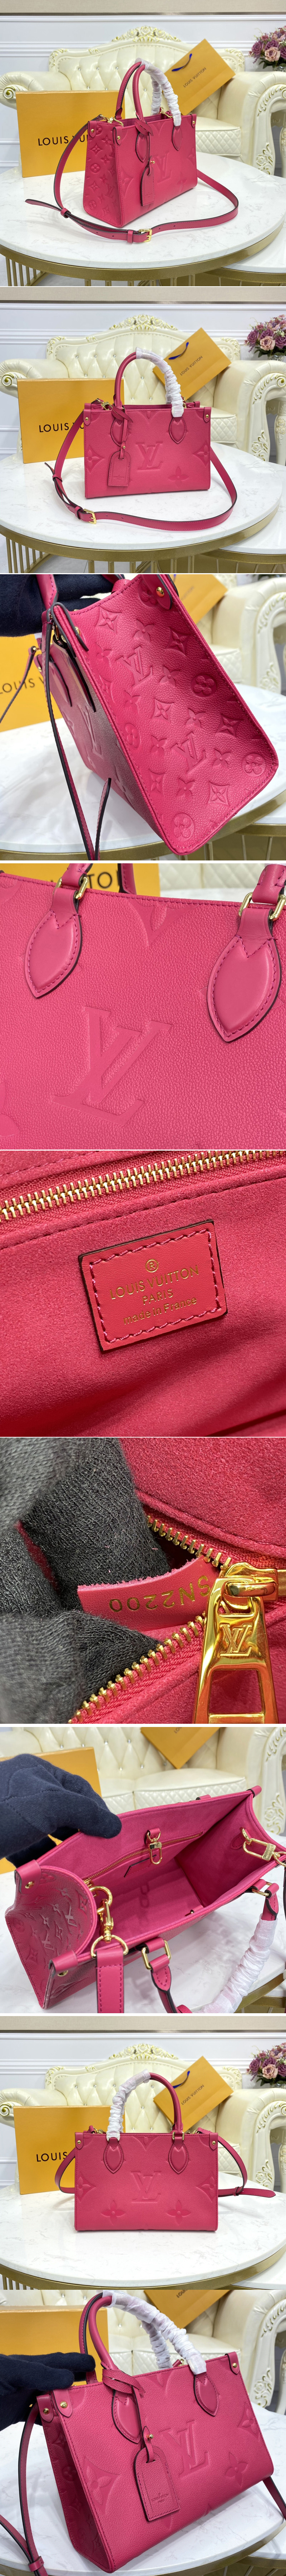 Replica Louis Vuitton M45660 LV OnTheGo PM tote Bag in Freesia Pink Monogram Empreinte leather